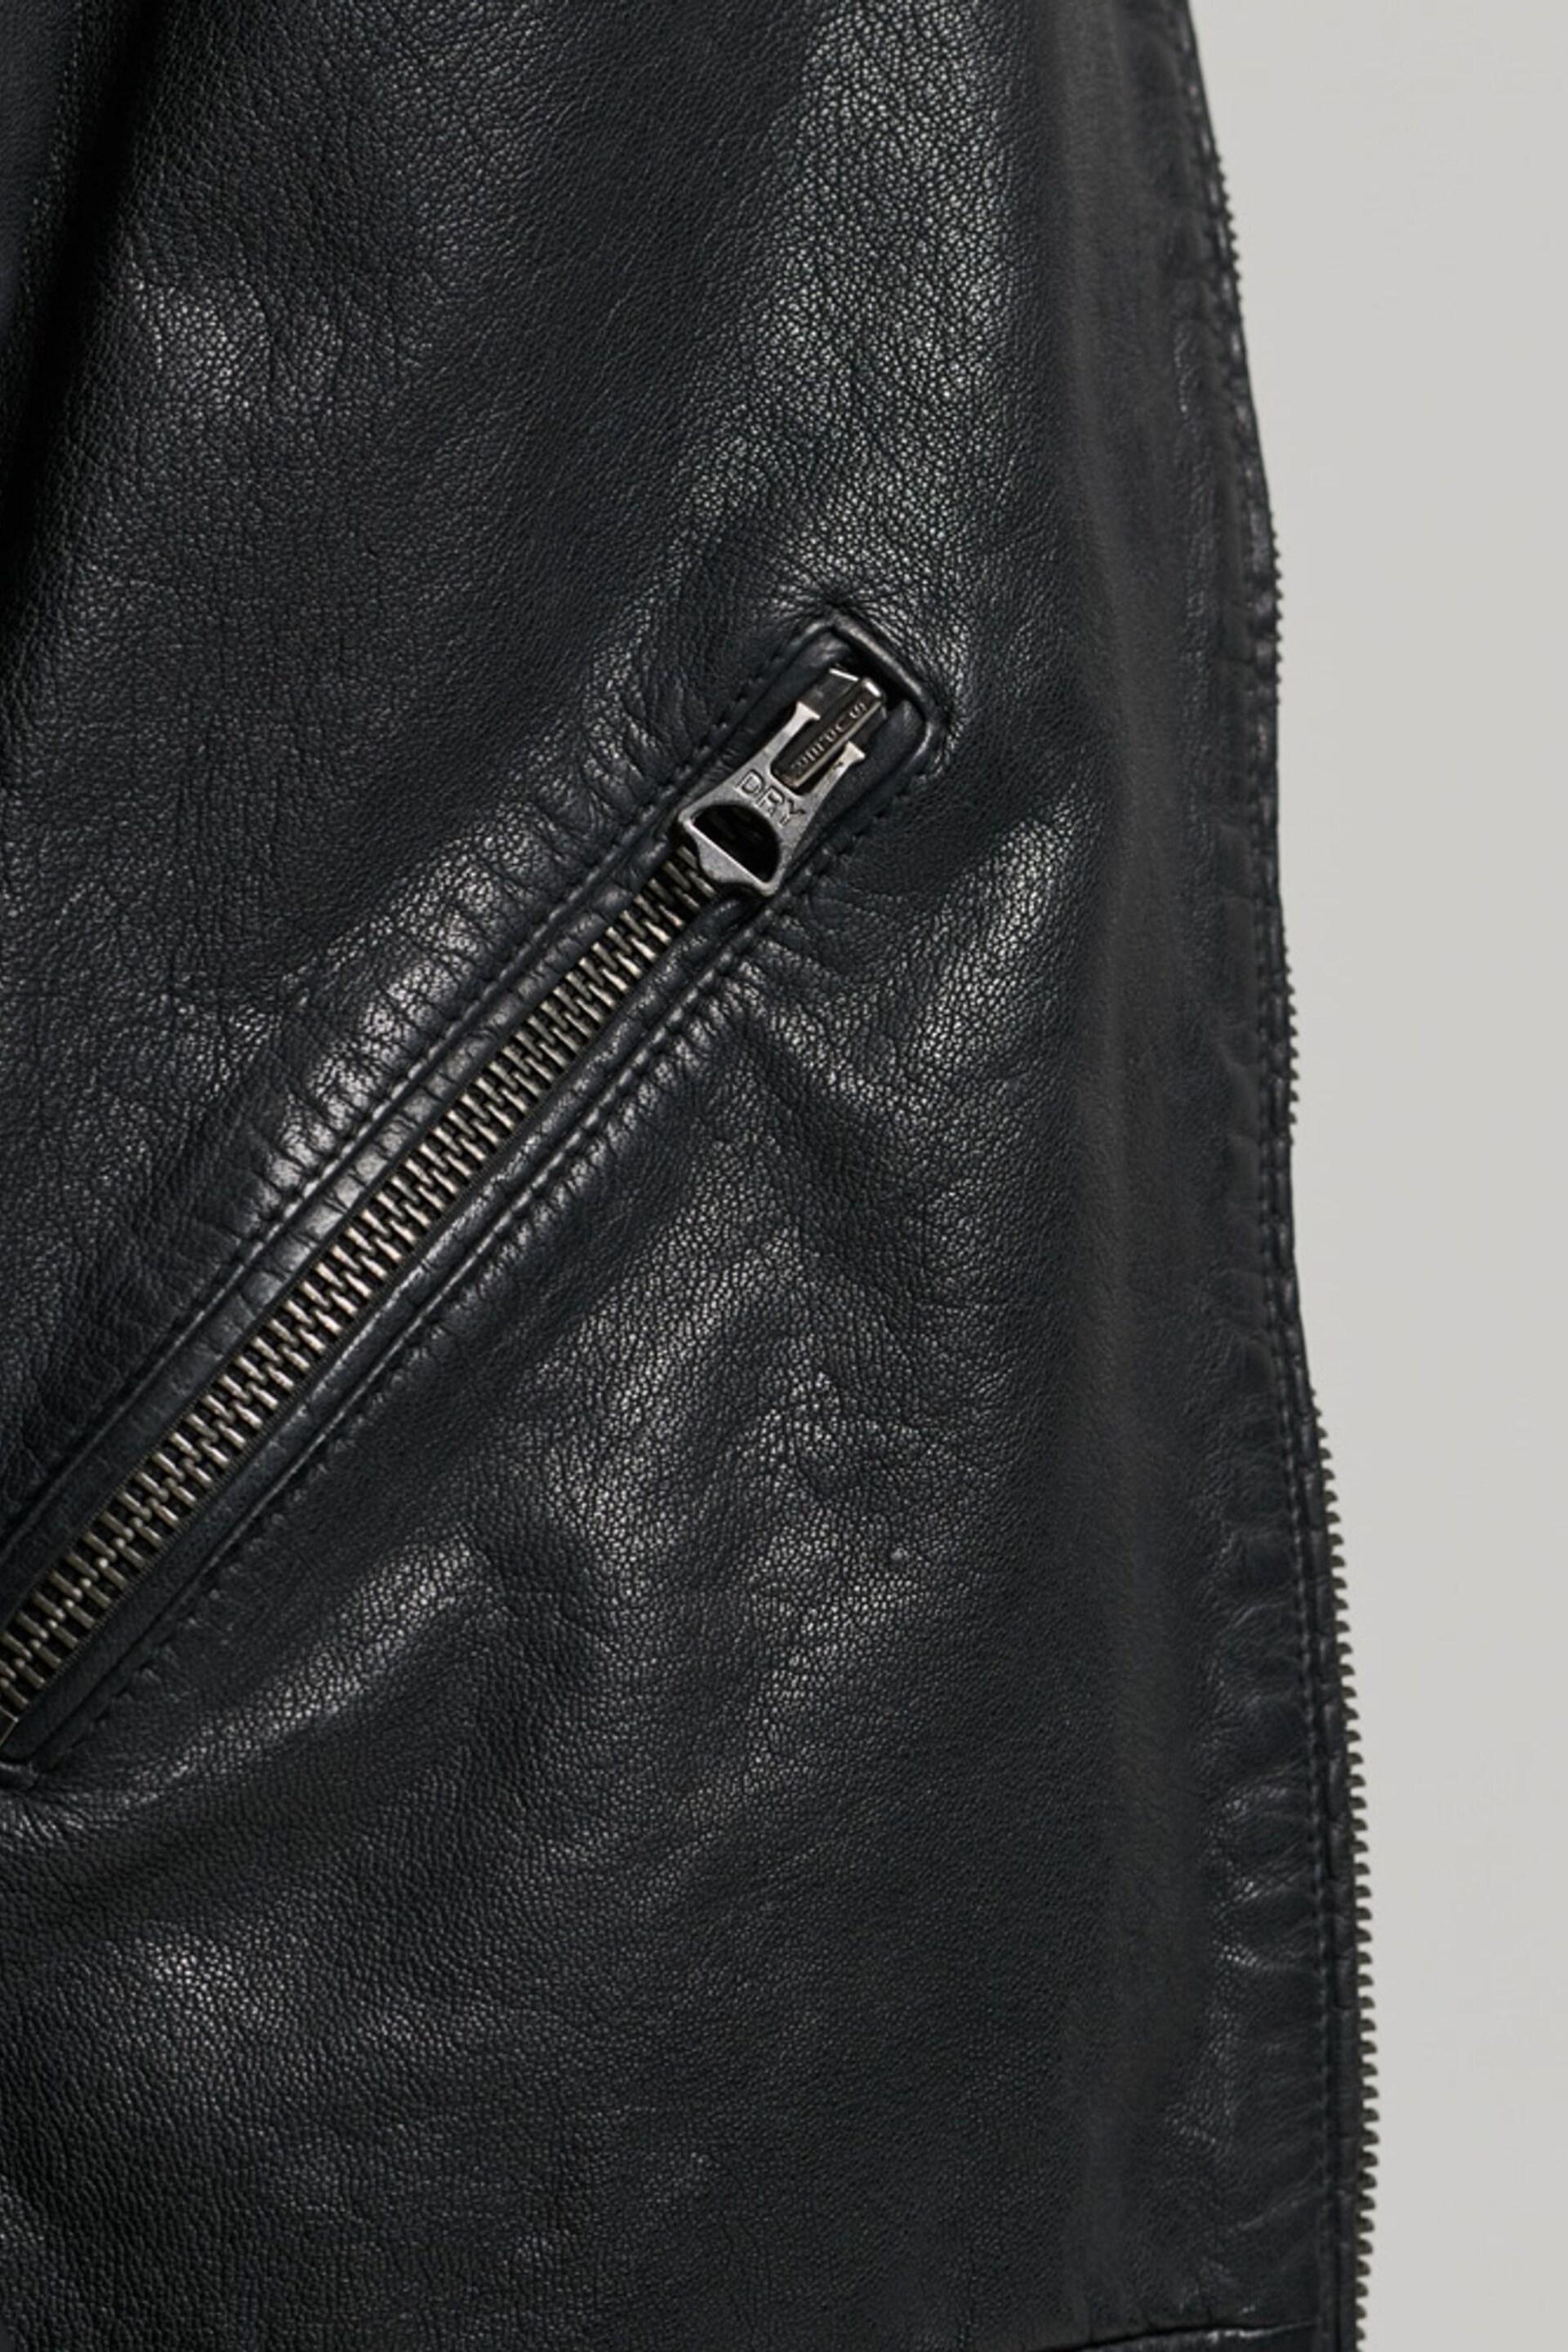 Superdry Black Heritage Leather Sports Racer Jacket - Image 8 of 8